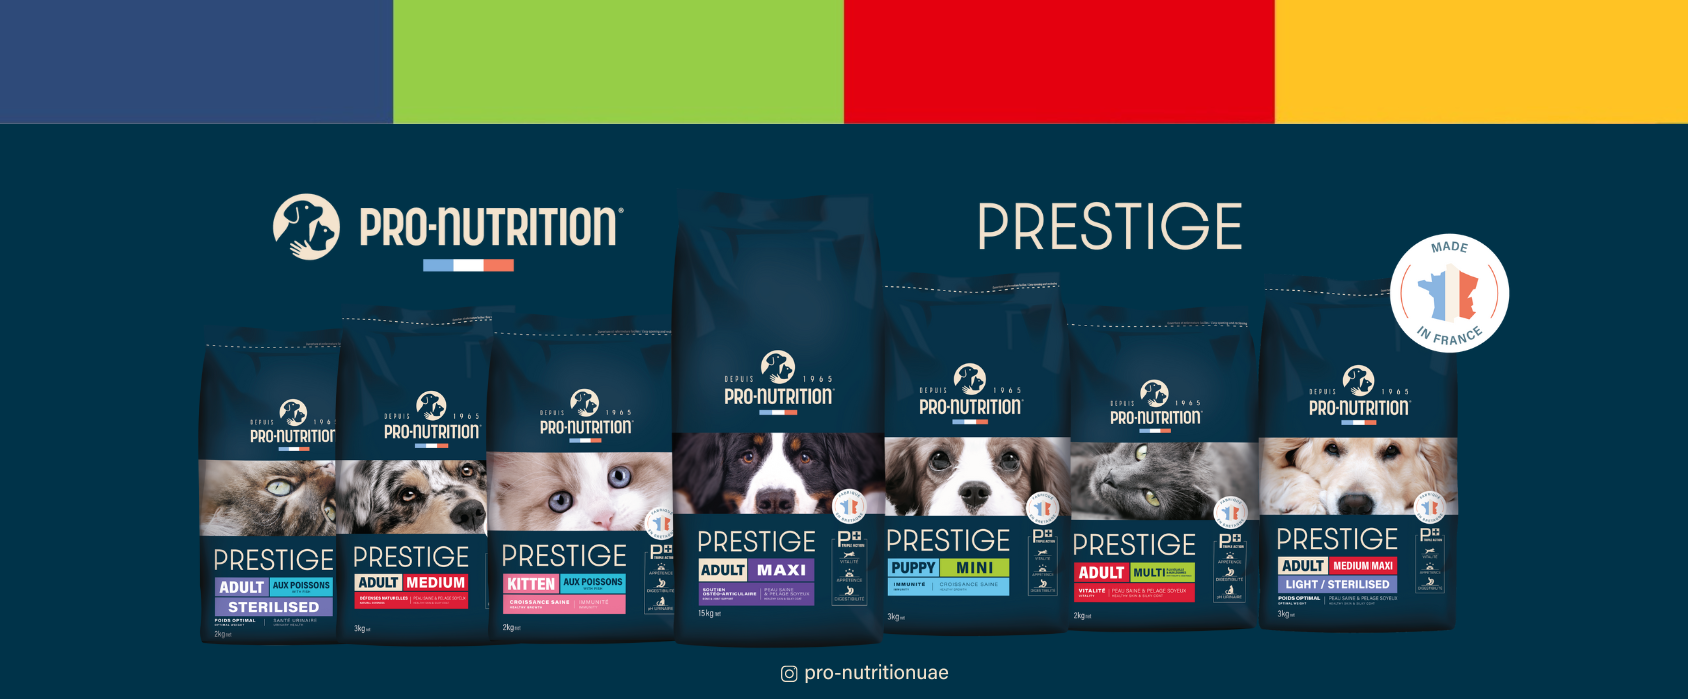 Pro-nutrition - Prestige Product Range